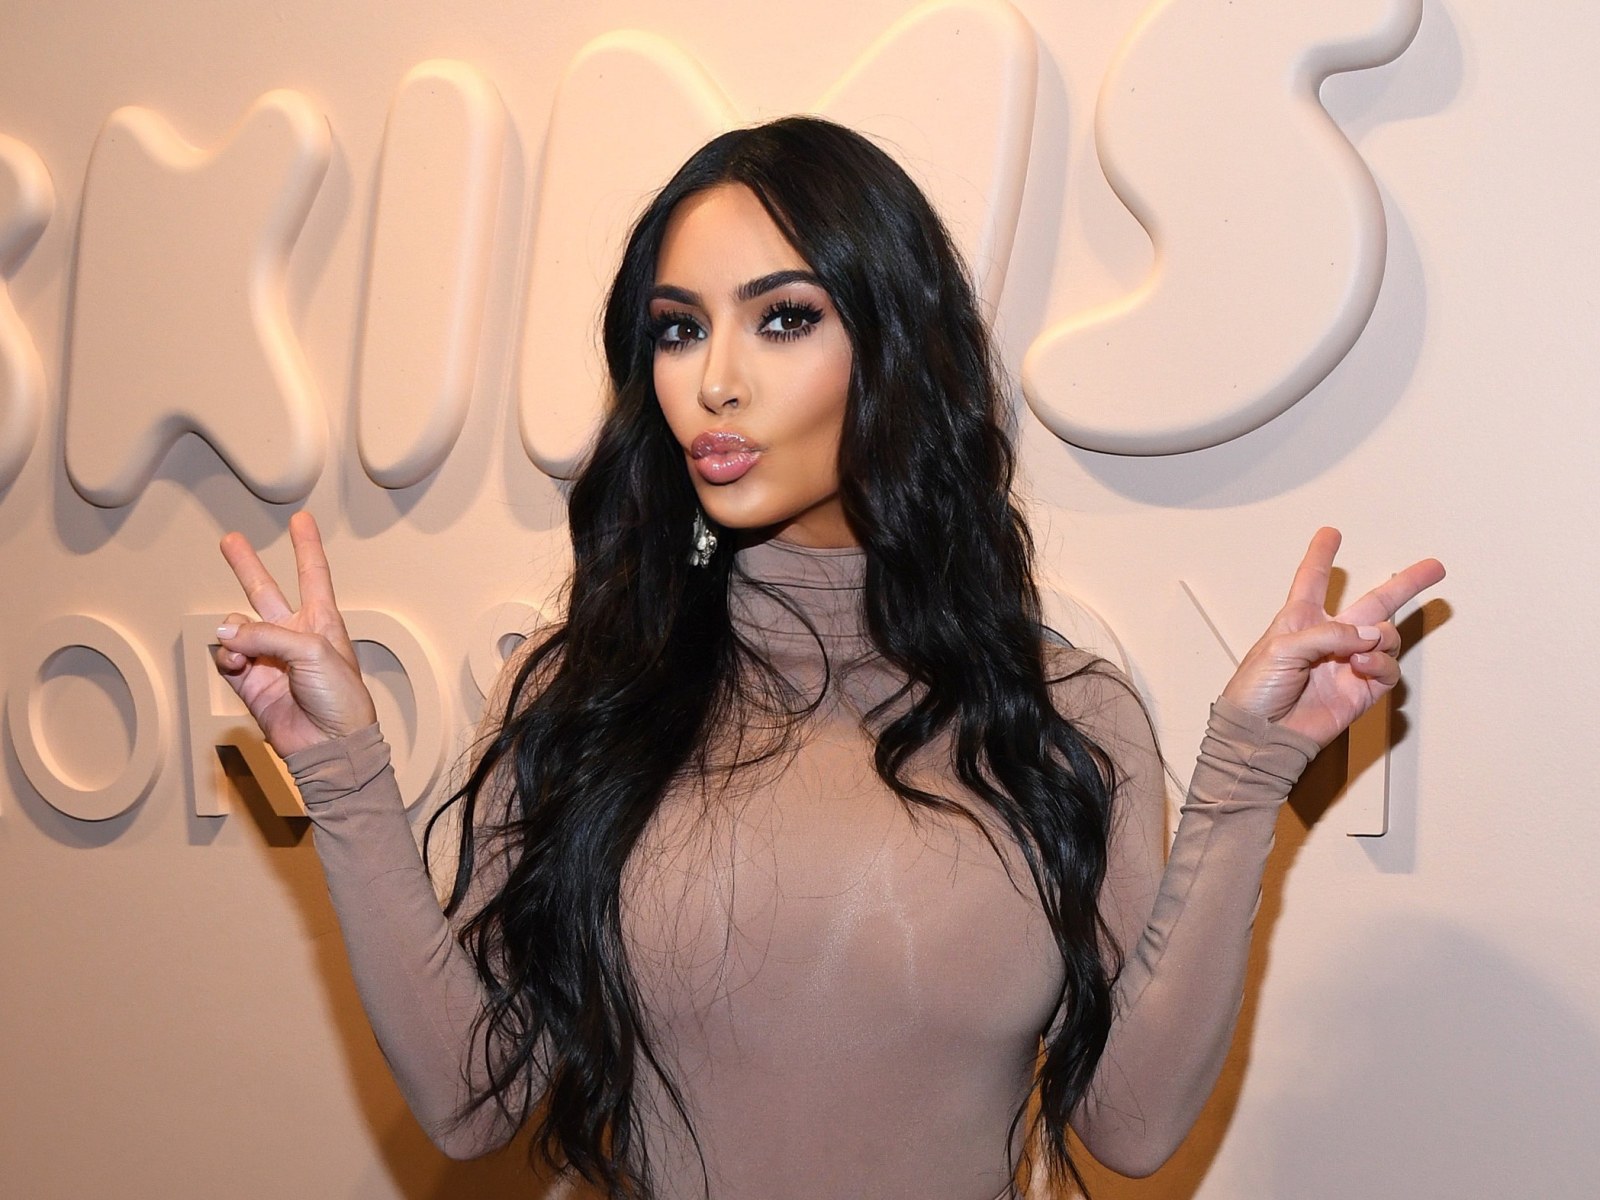 Kim Kardashian's SKIMS Return Policy Slammed By Customers